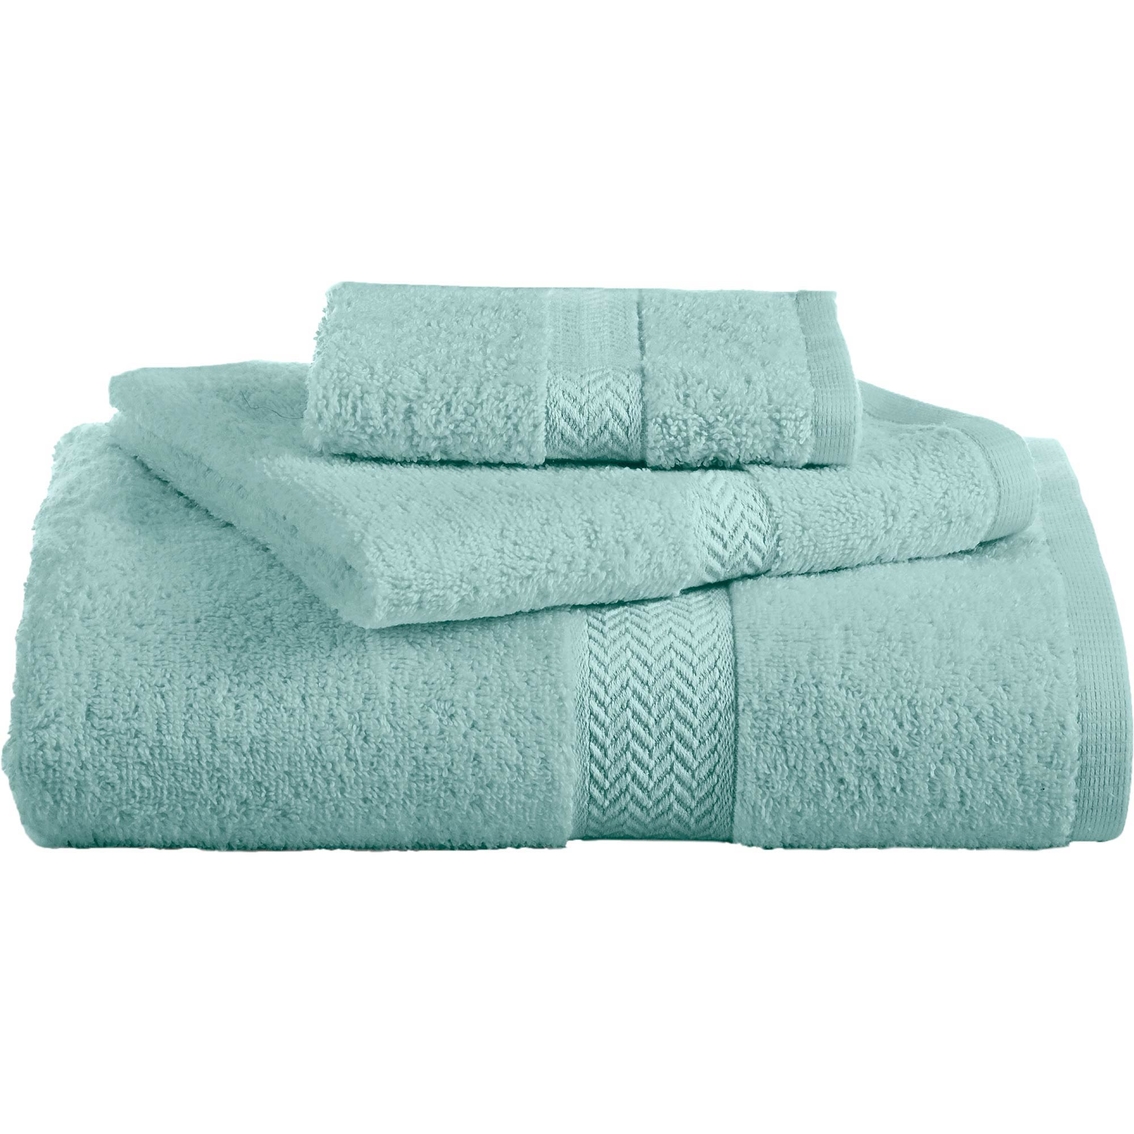 Martex Ringspun Bath Towel | Bath Towels | Household ...